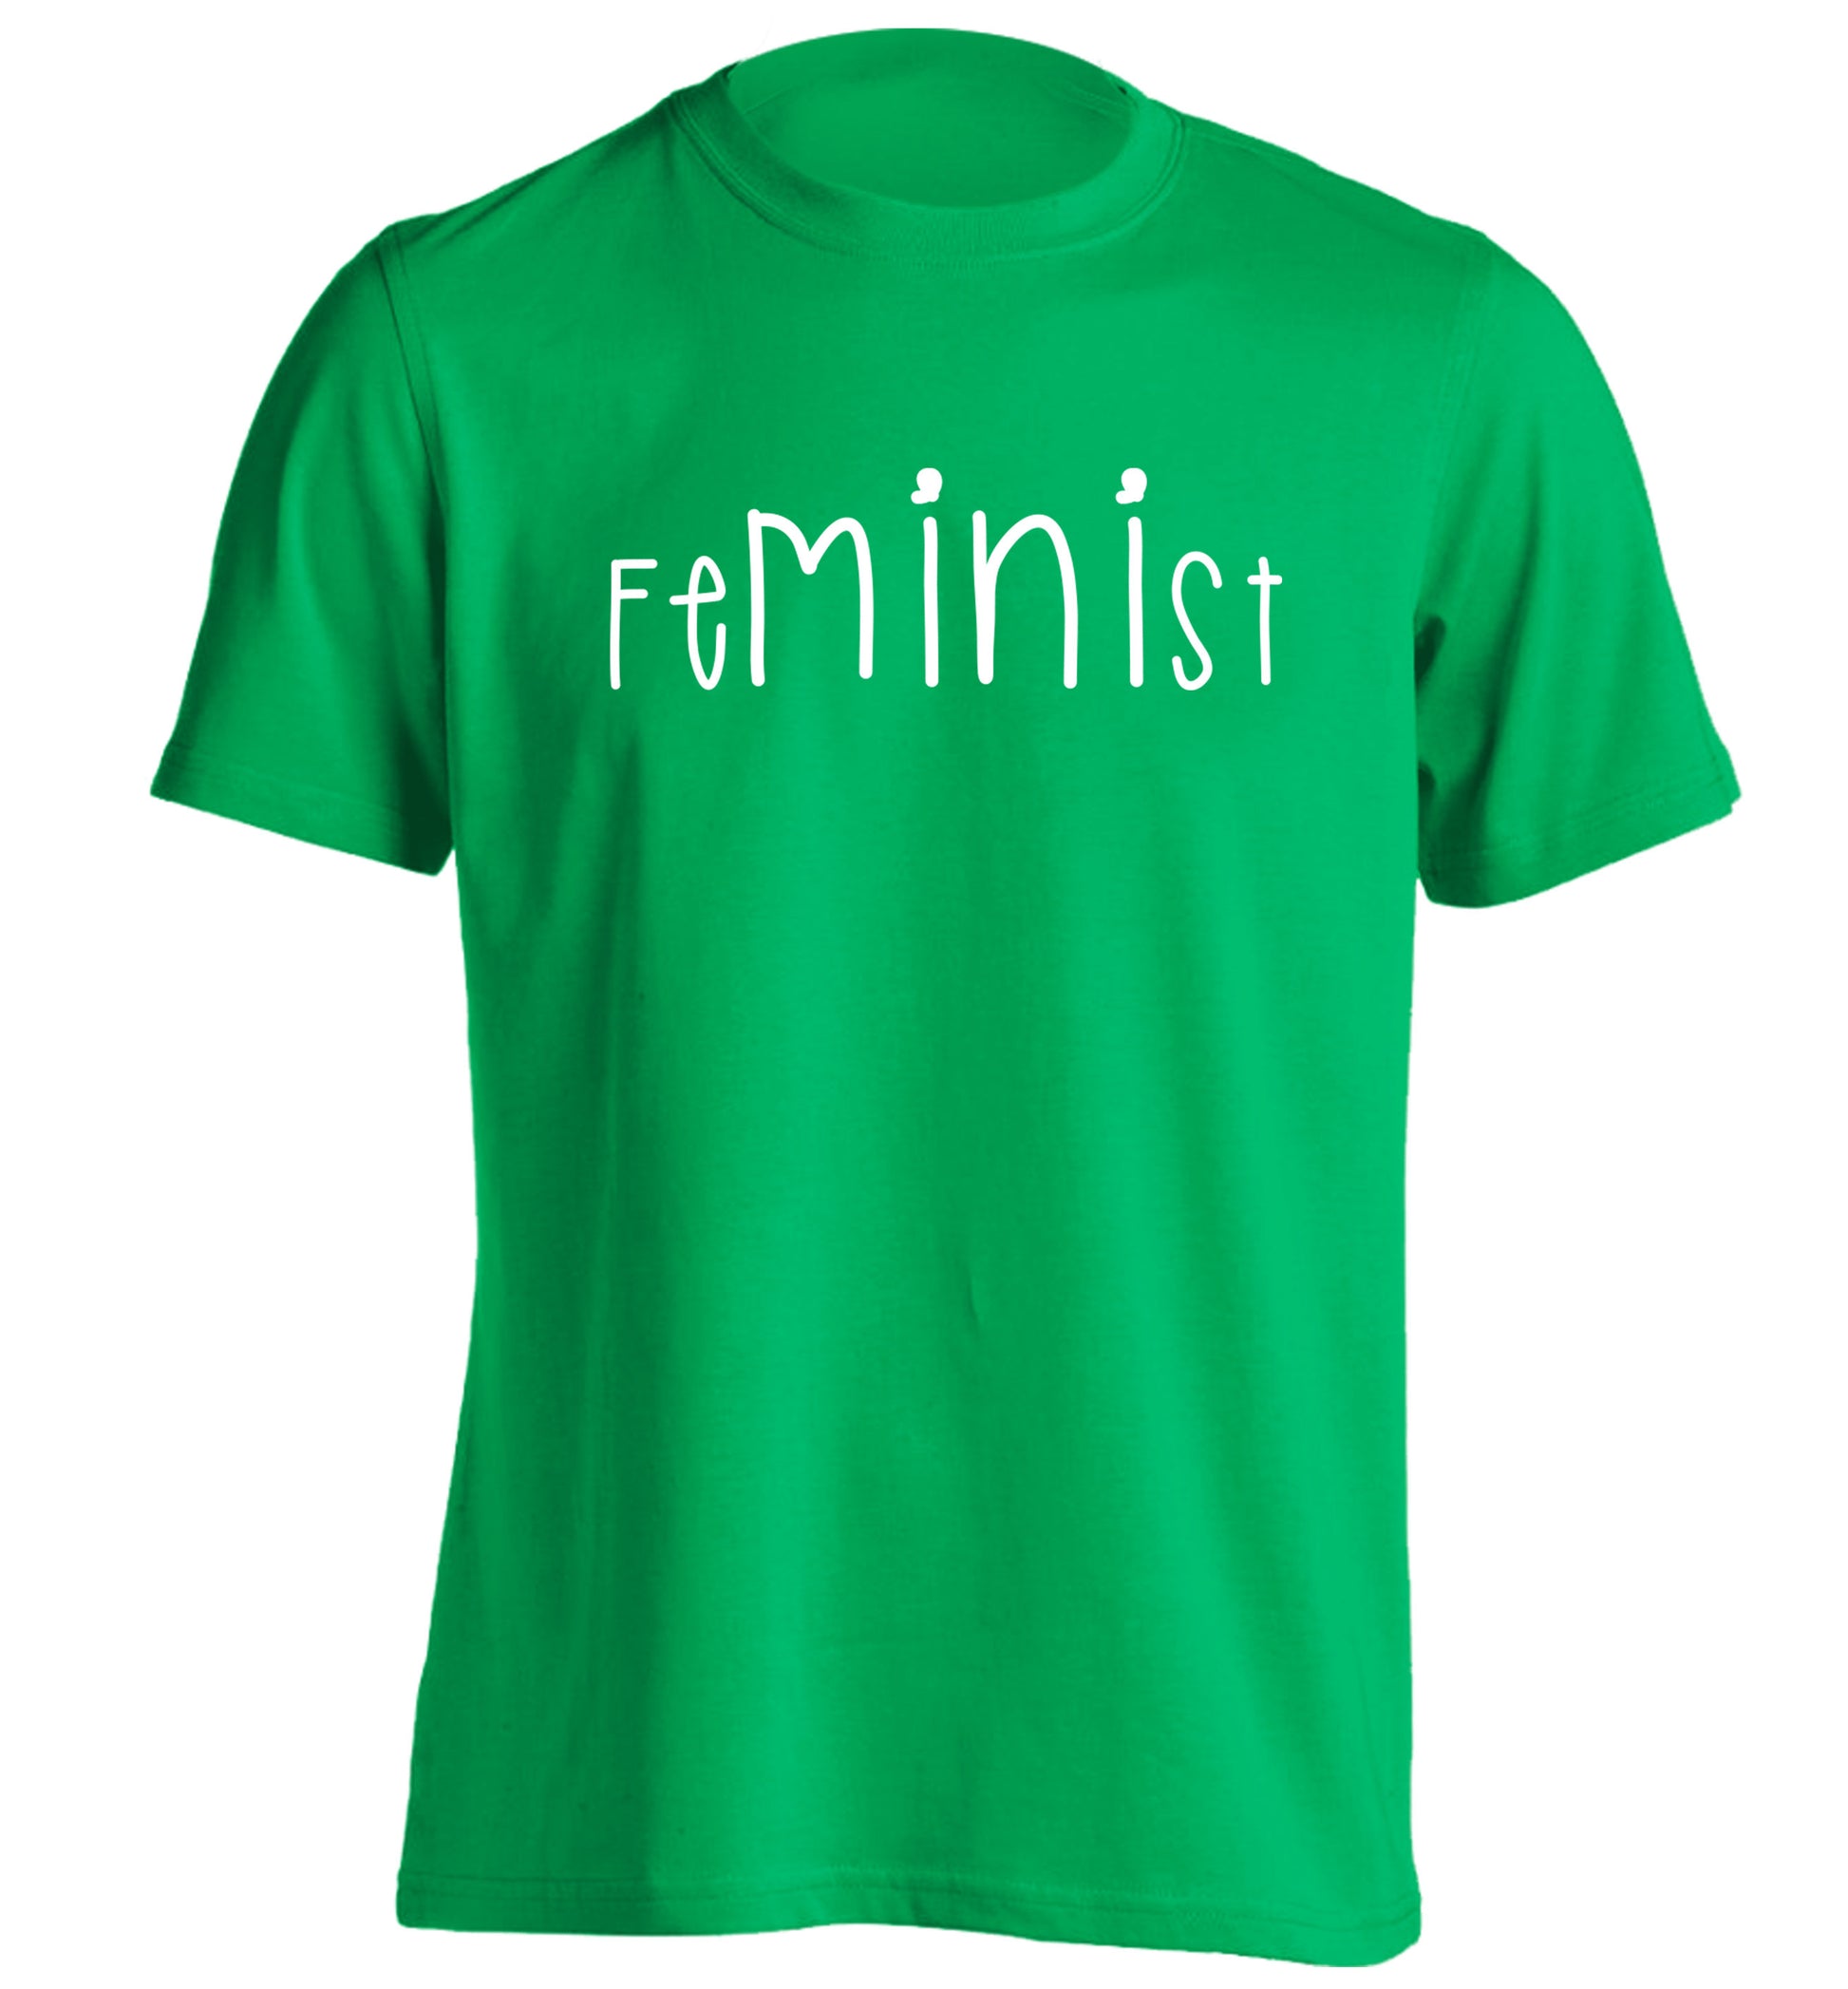 FeMINIst adults unisex green Tshirt 2XL